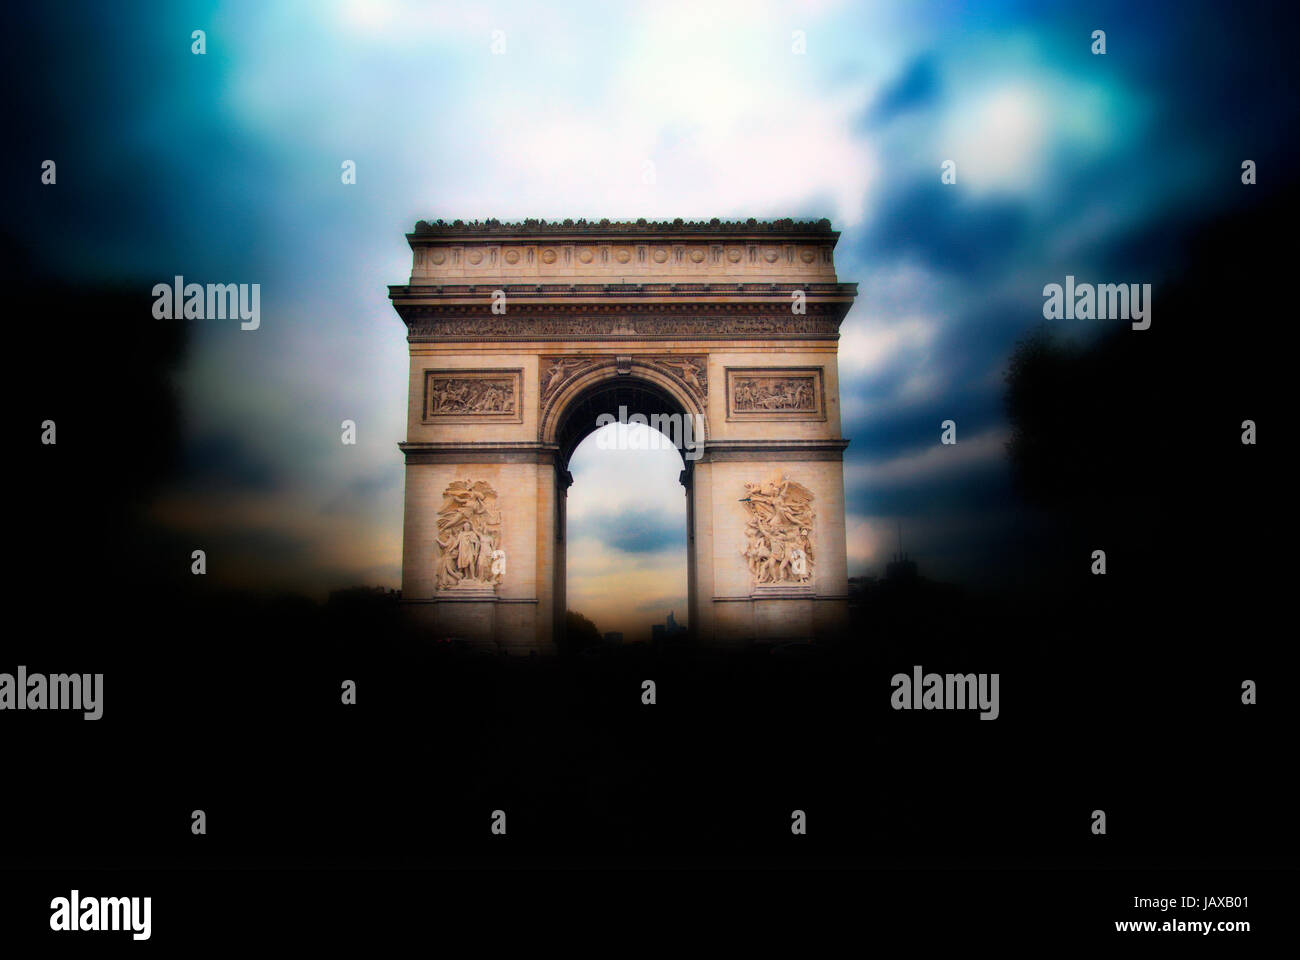 Monumental Landmark Arch De Triumph in Paris - France Stock Photo